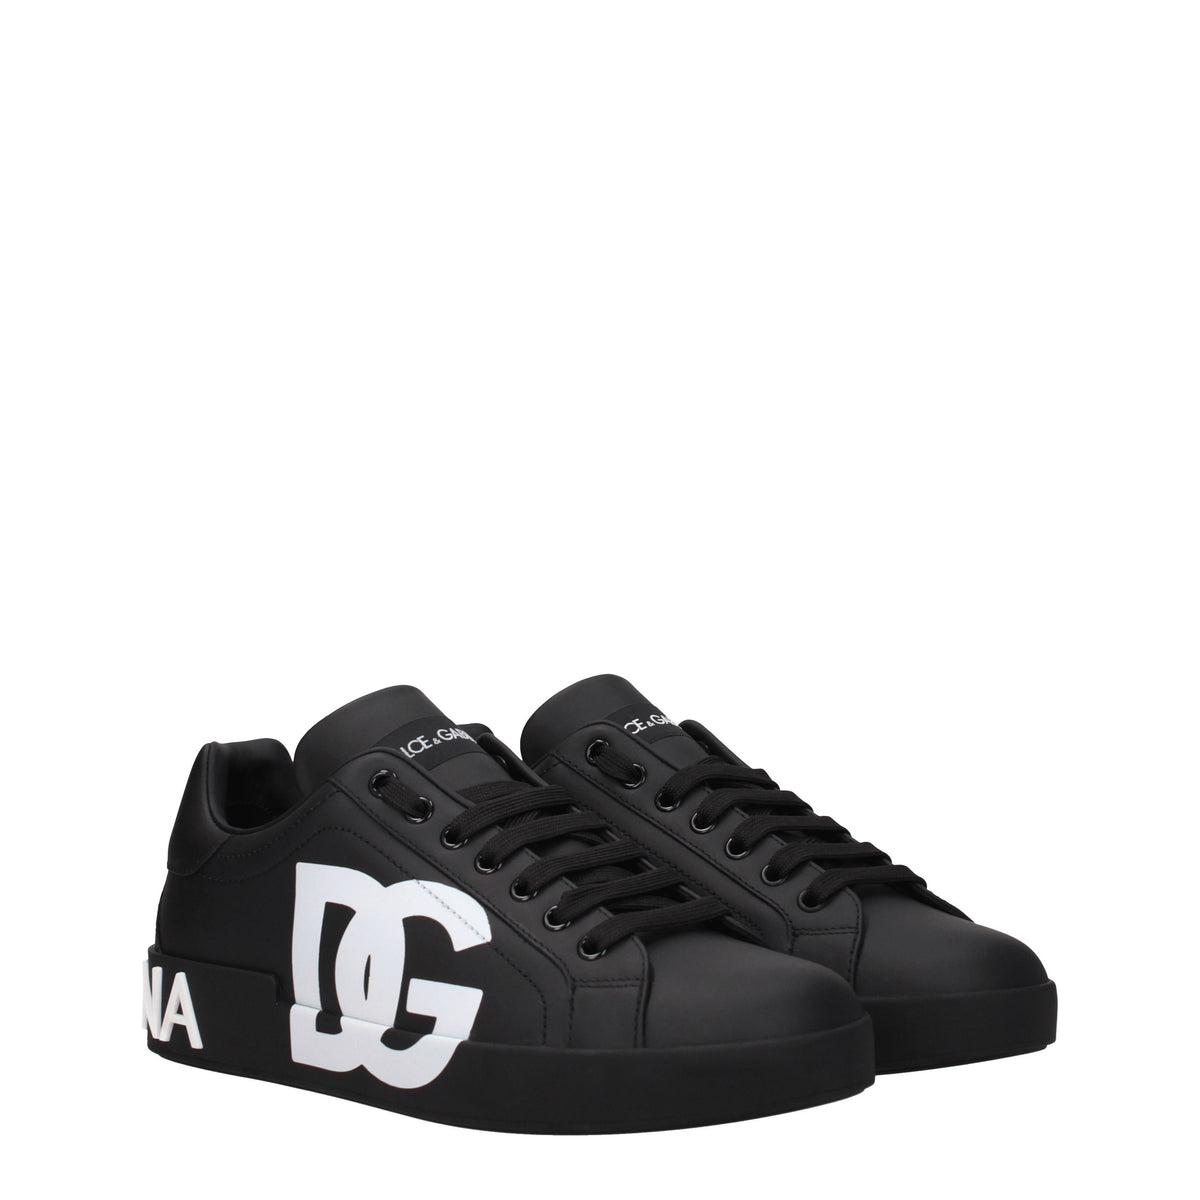 Dolce&Gabbana Sneakers Uomo Pelle Nero Bianco